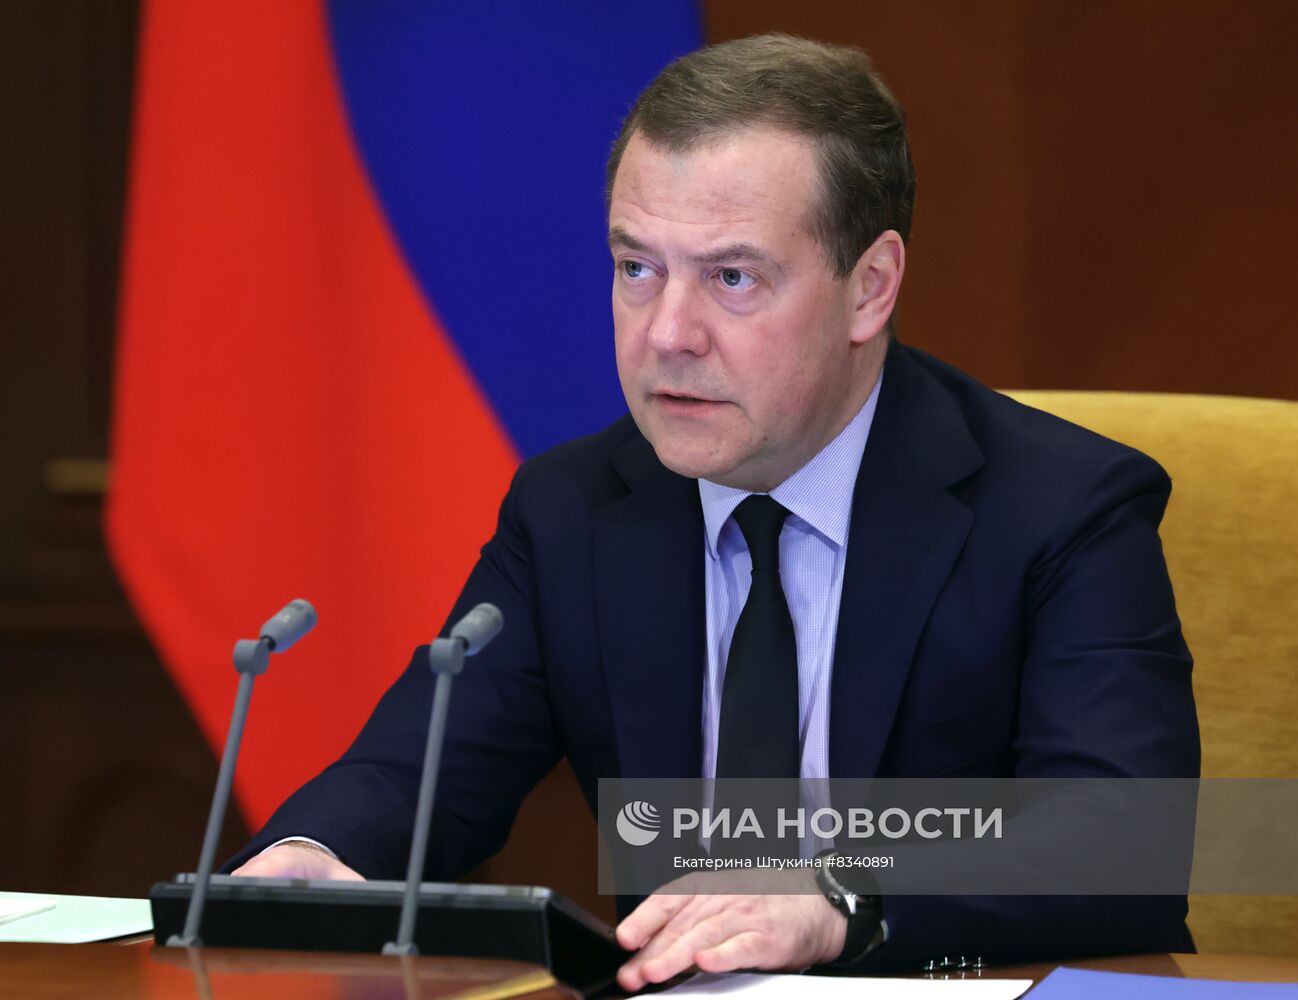 Зампред Совбеза РФ Д. Медведев провел заседание межведомственной комиссии Совбеза РФ